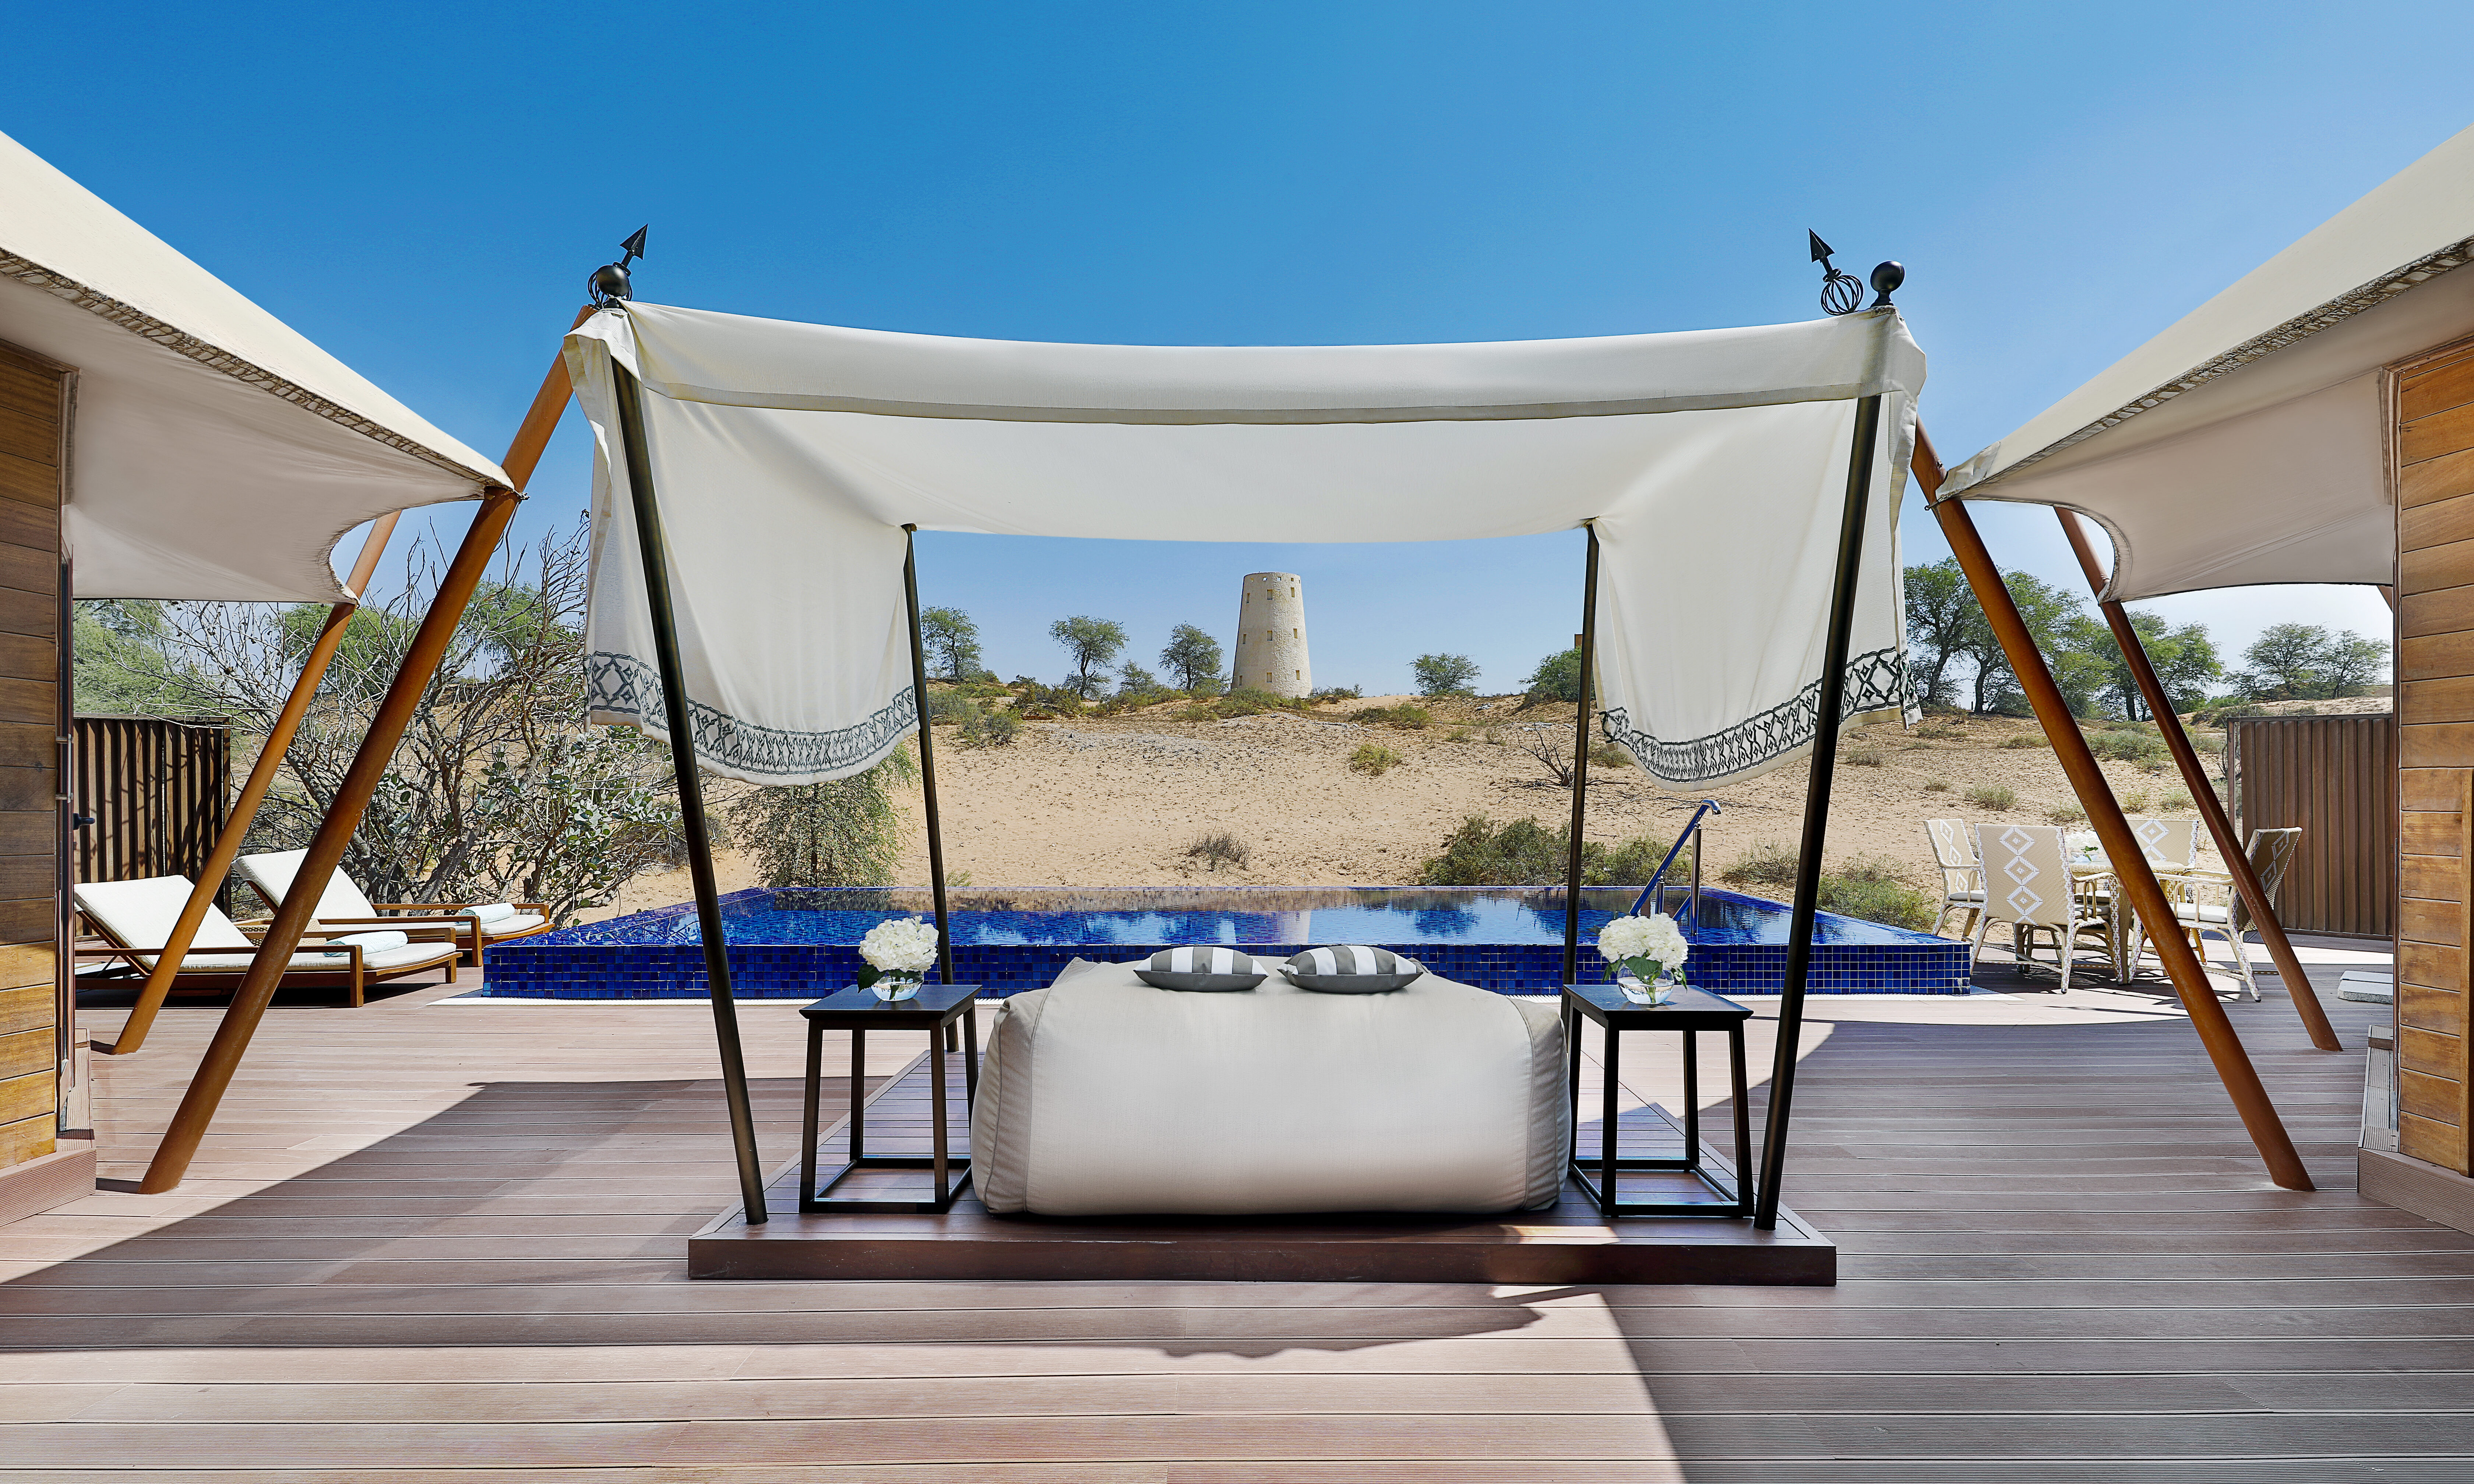 The Ritz Carlton Al Wadi Desert resort Ras Al Khaimah